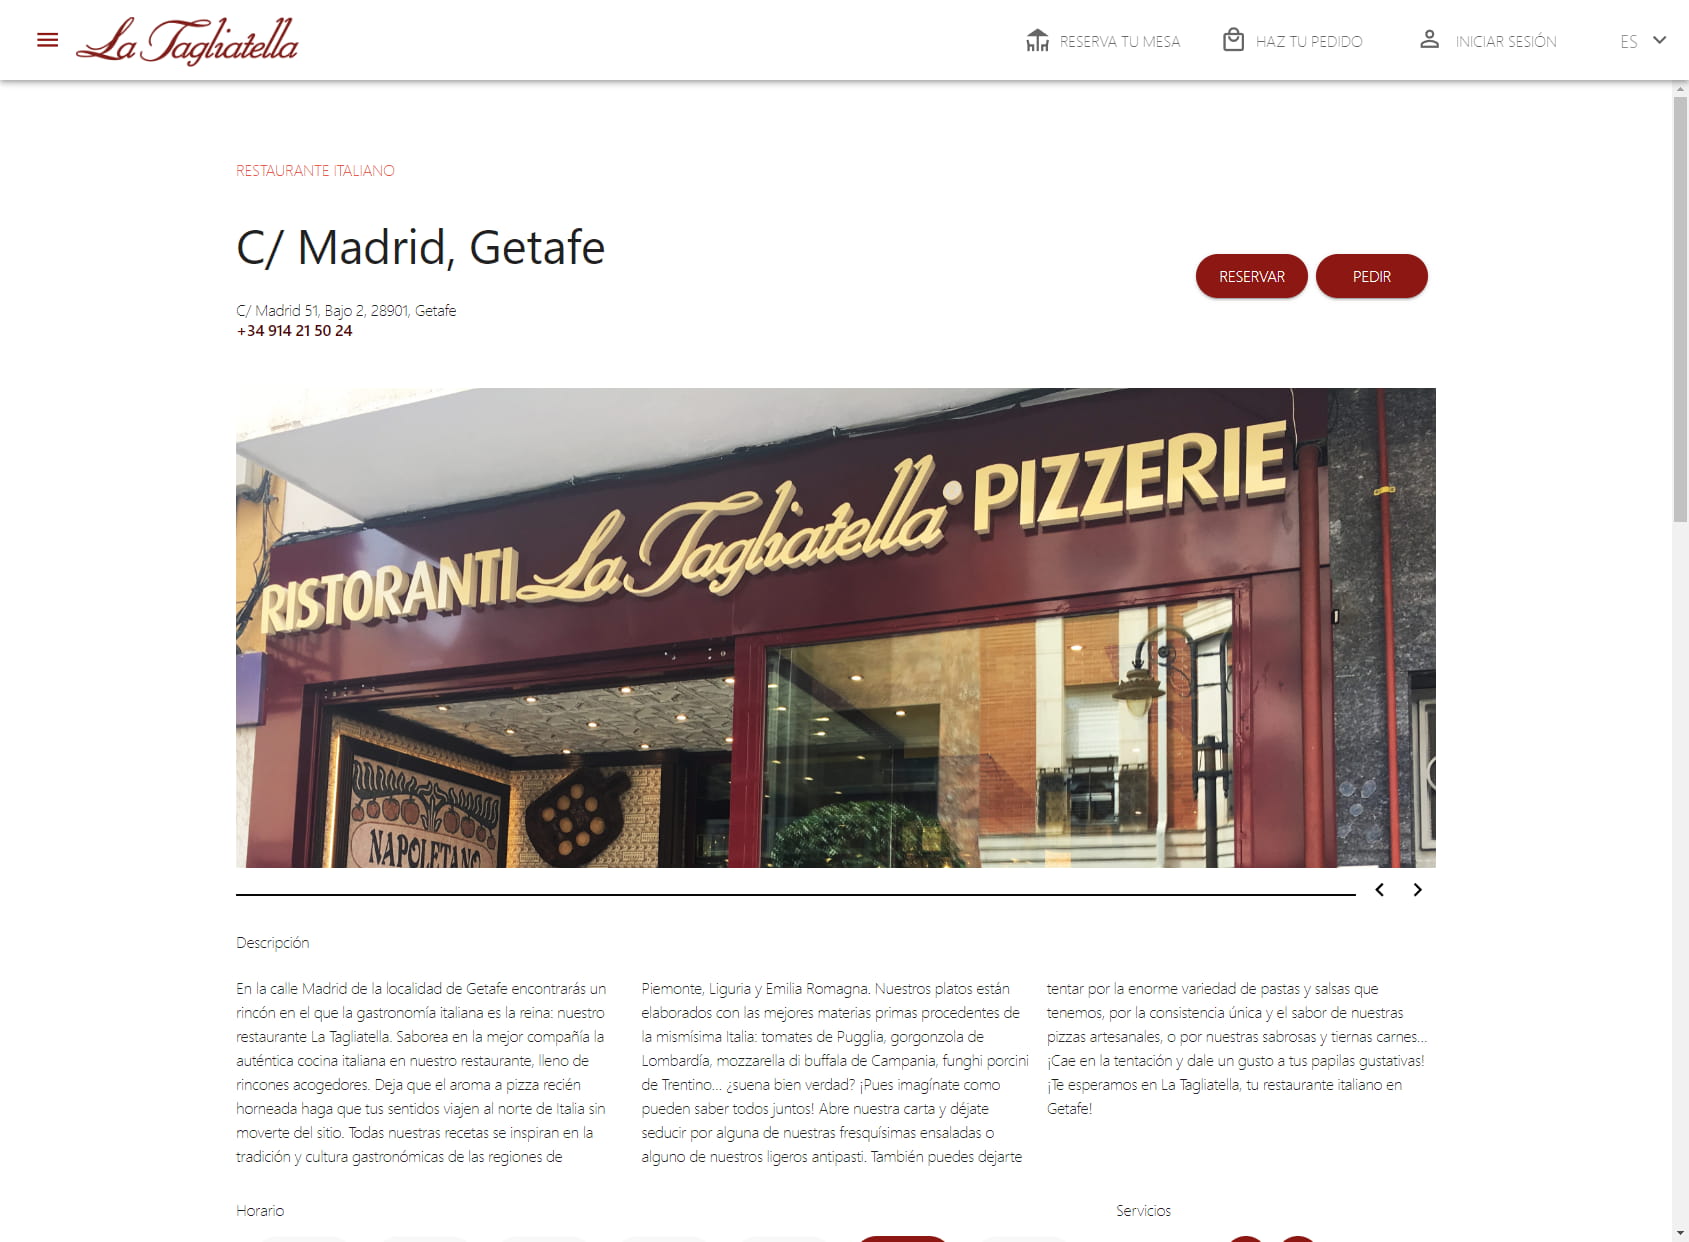 Restaurante La Tagliatella | C/ Madrid, Getafe